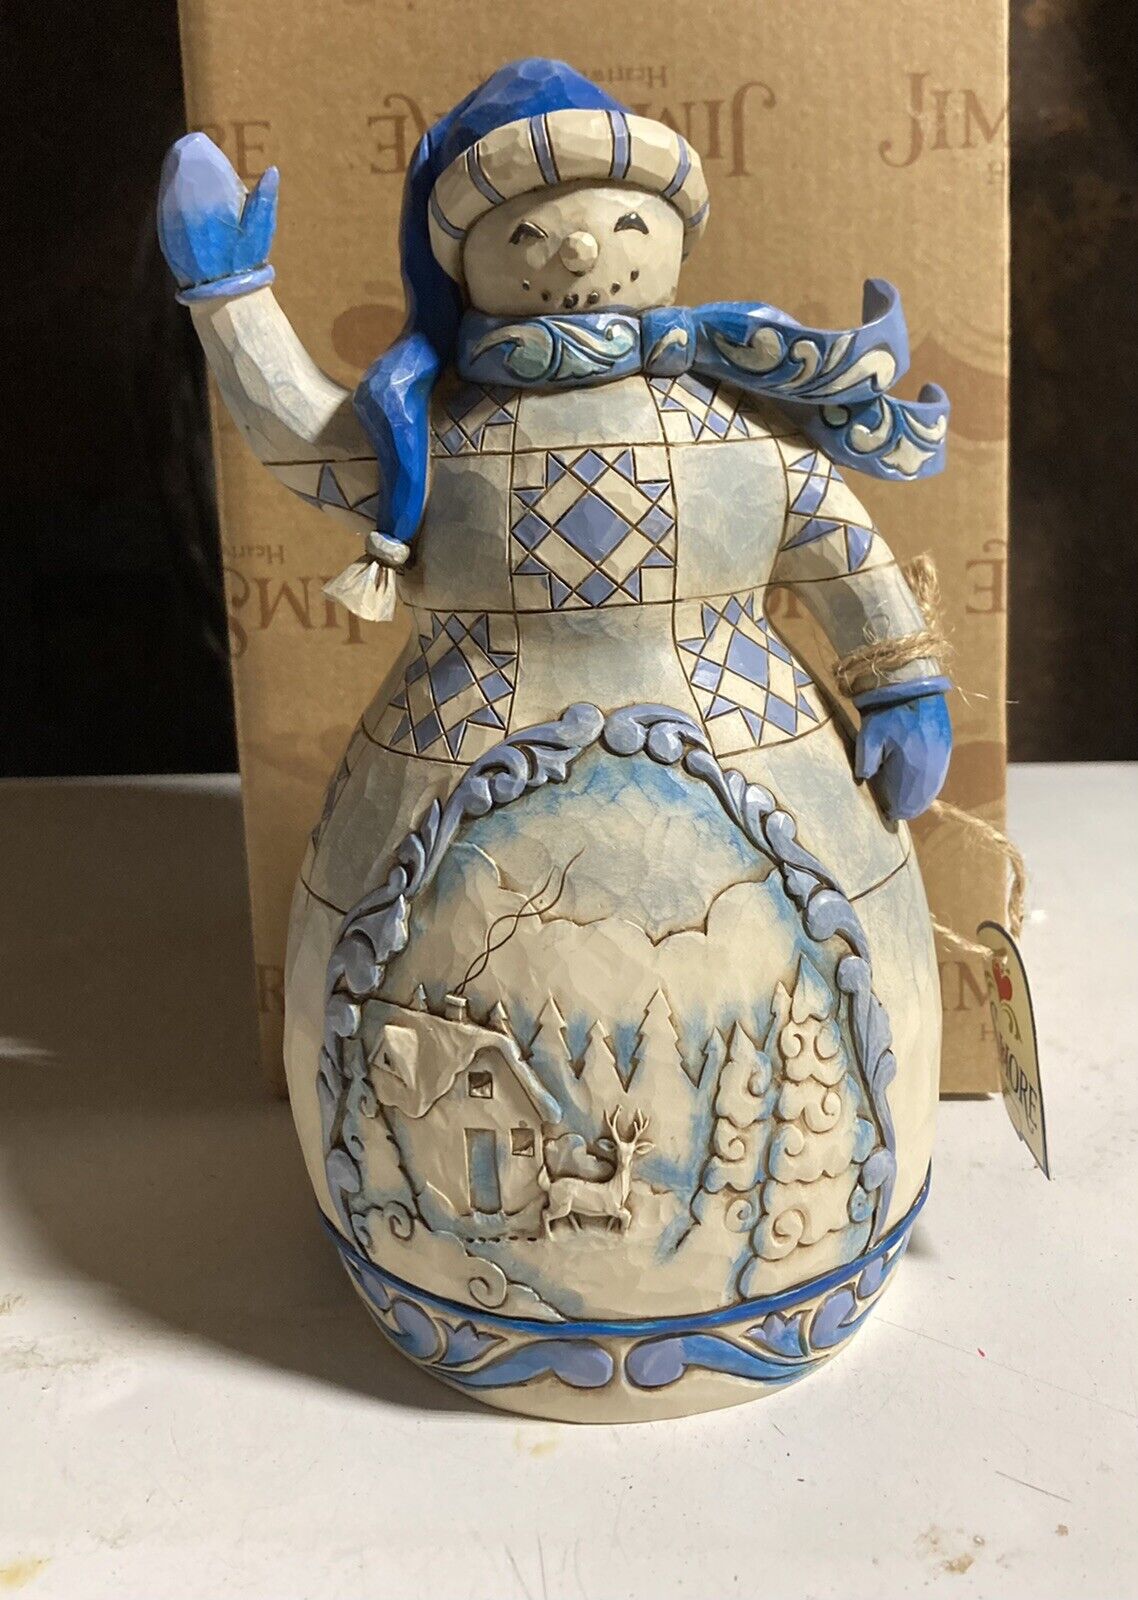 2012 JIM SHORE “Cheerful Greetings”with Box Enesco Blue Snowman Figurine